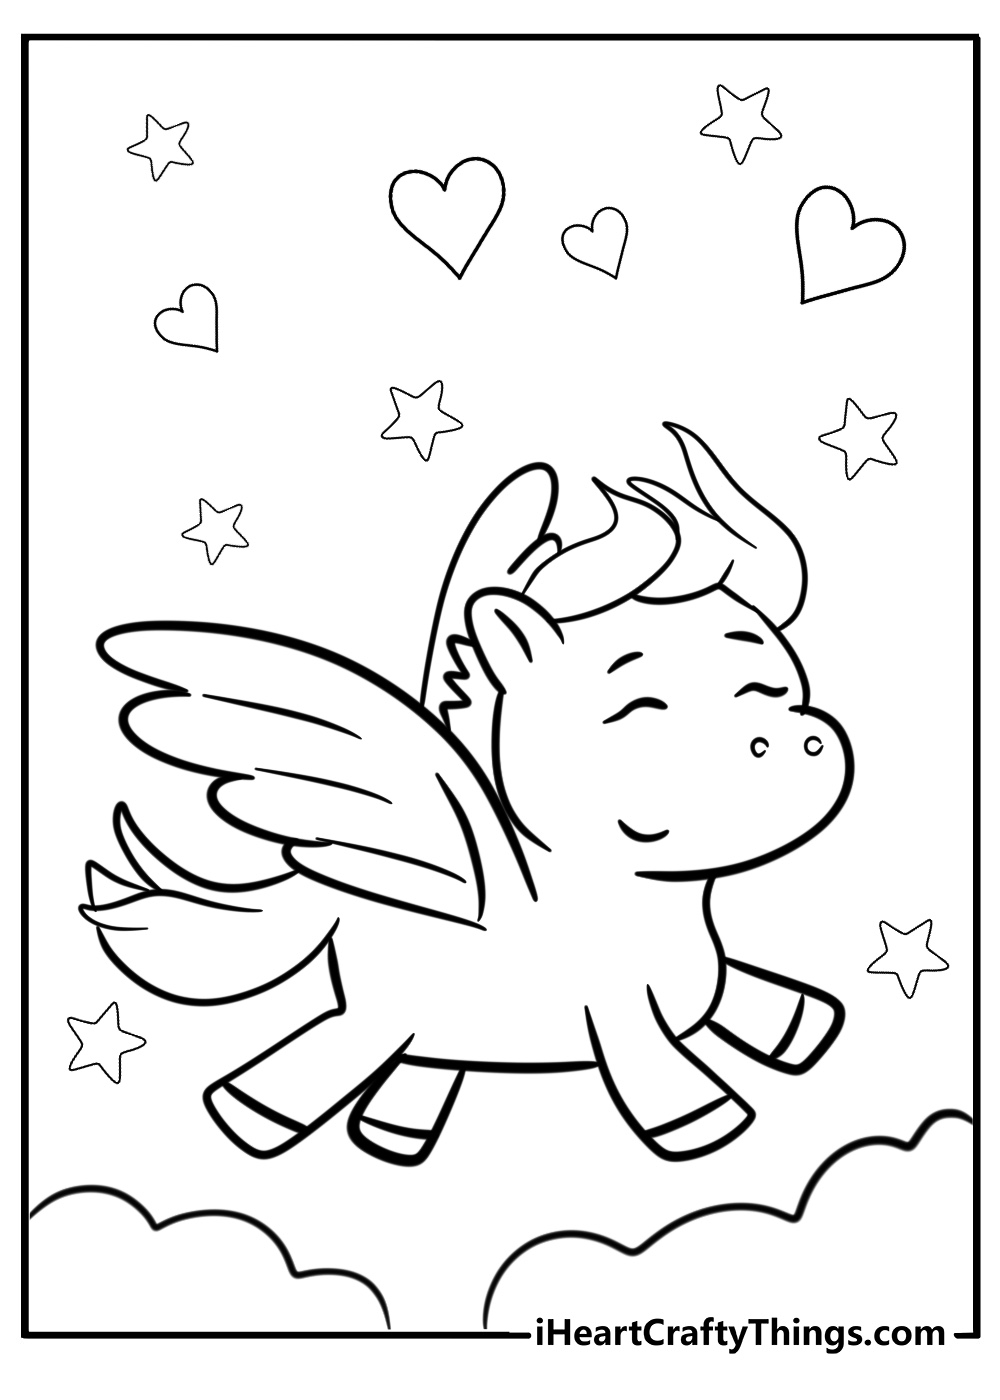 Smiling chibi pegasus coloring page for preschoolers